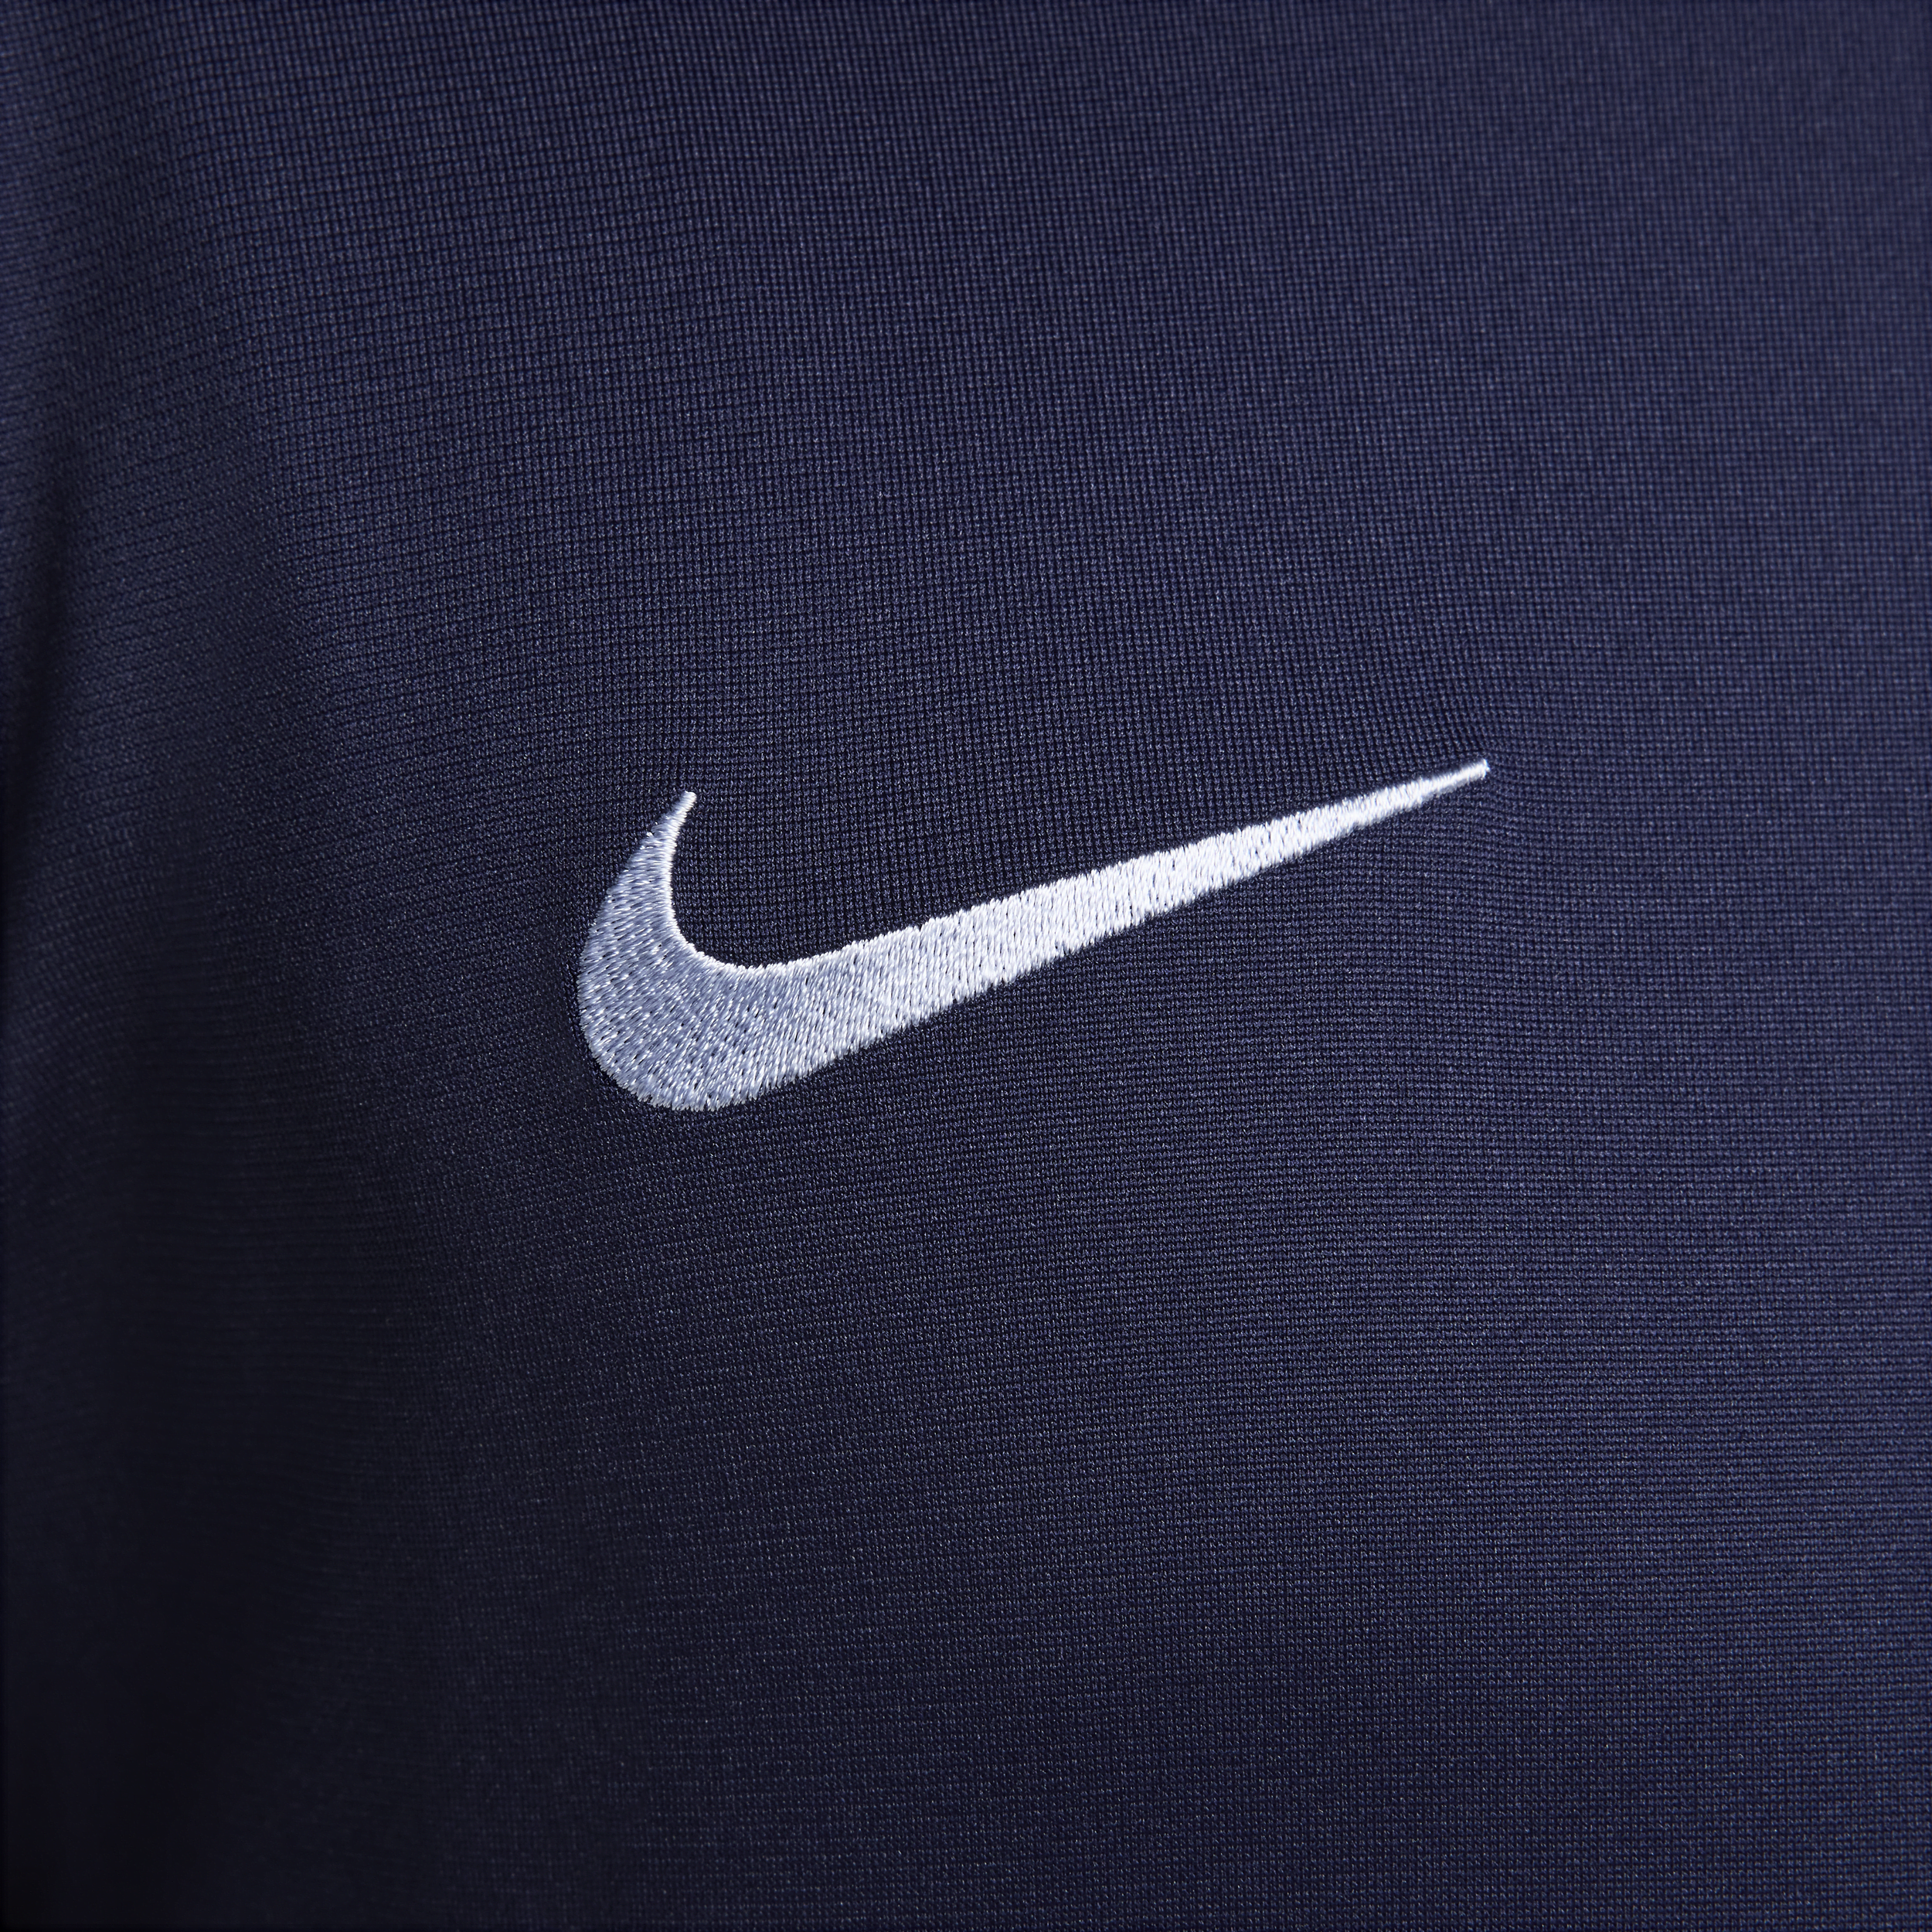 Nike FFF Strike Dri-FIT knit voetbaltrainingspak voor heren Blauw